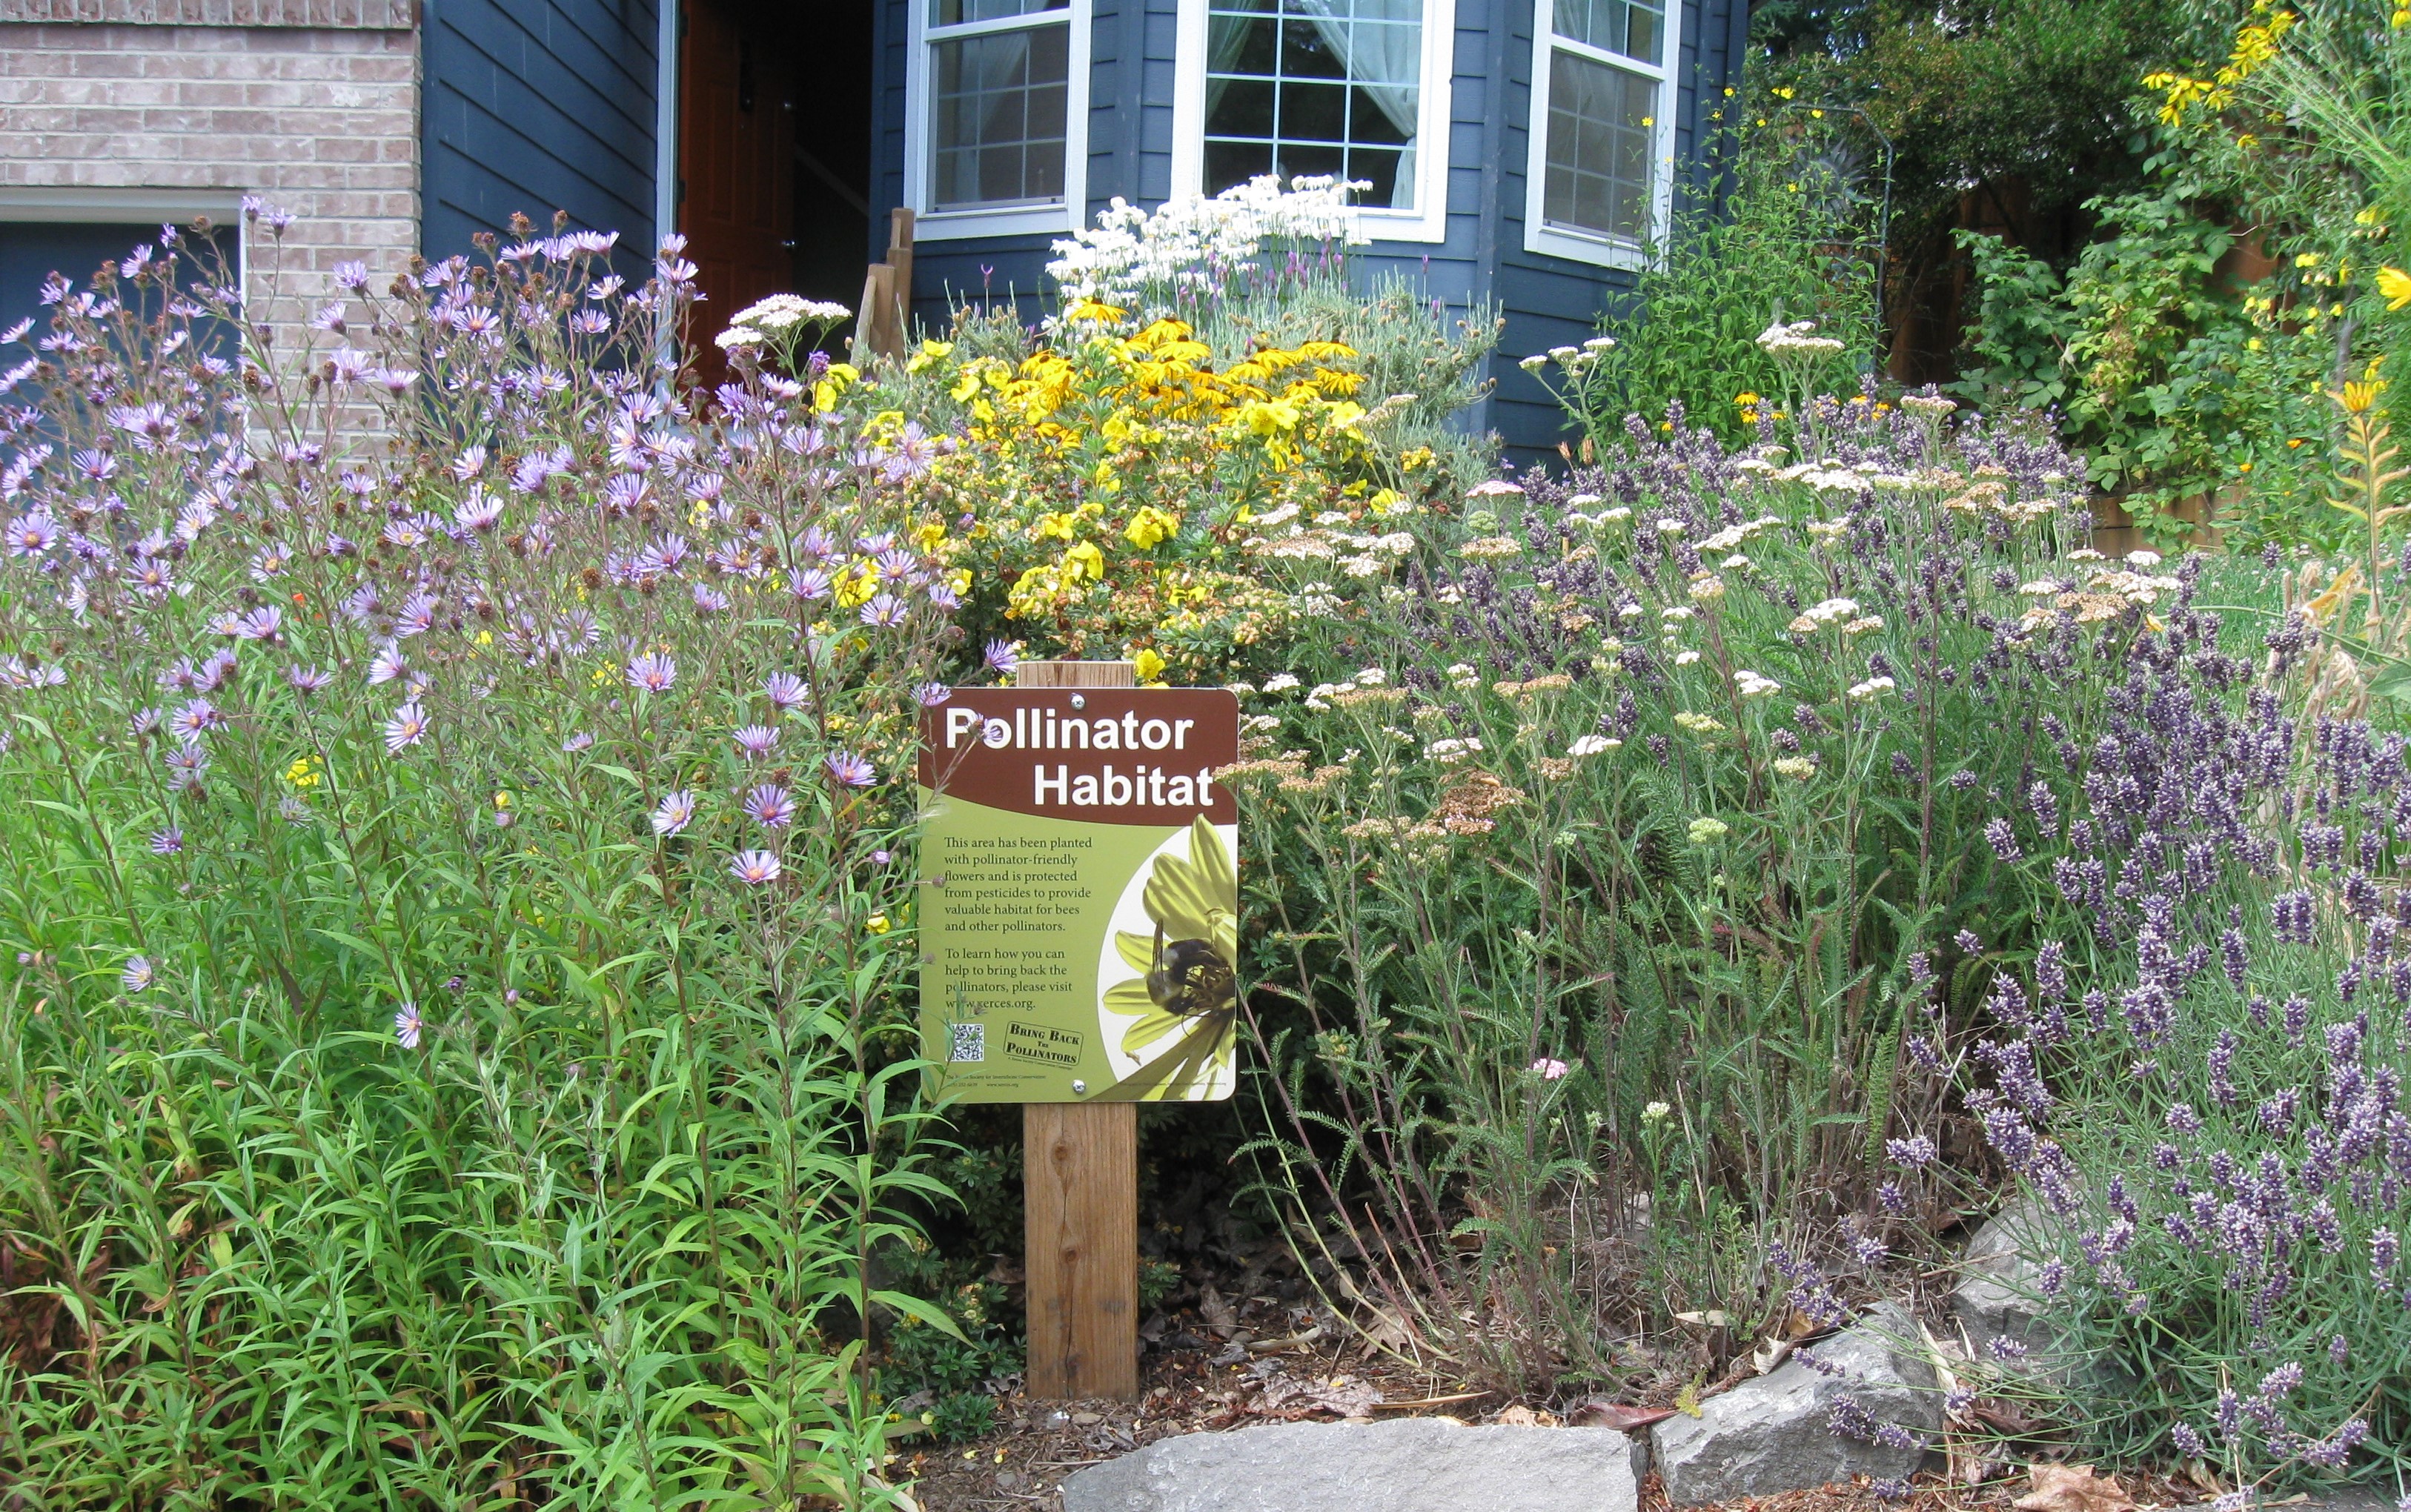 A pollinator habitat sign in a suburban front garden